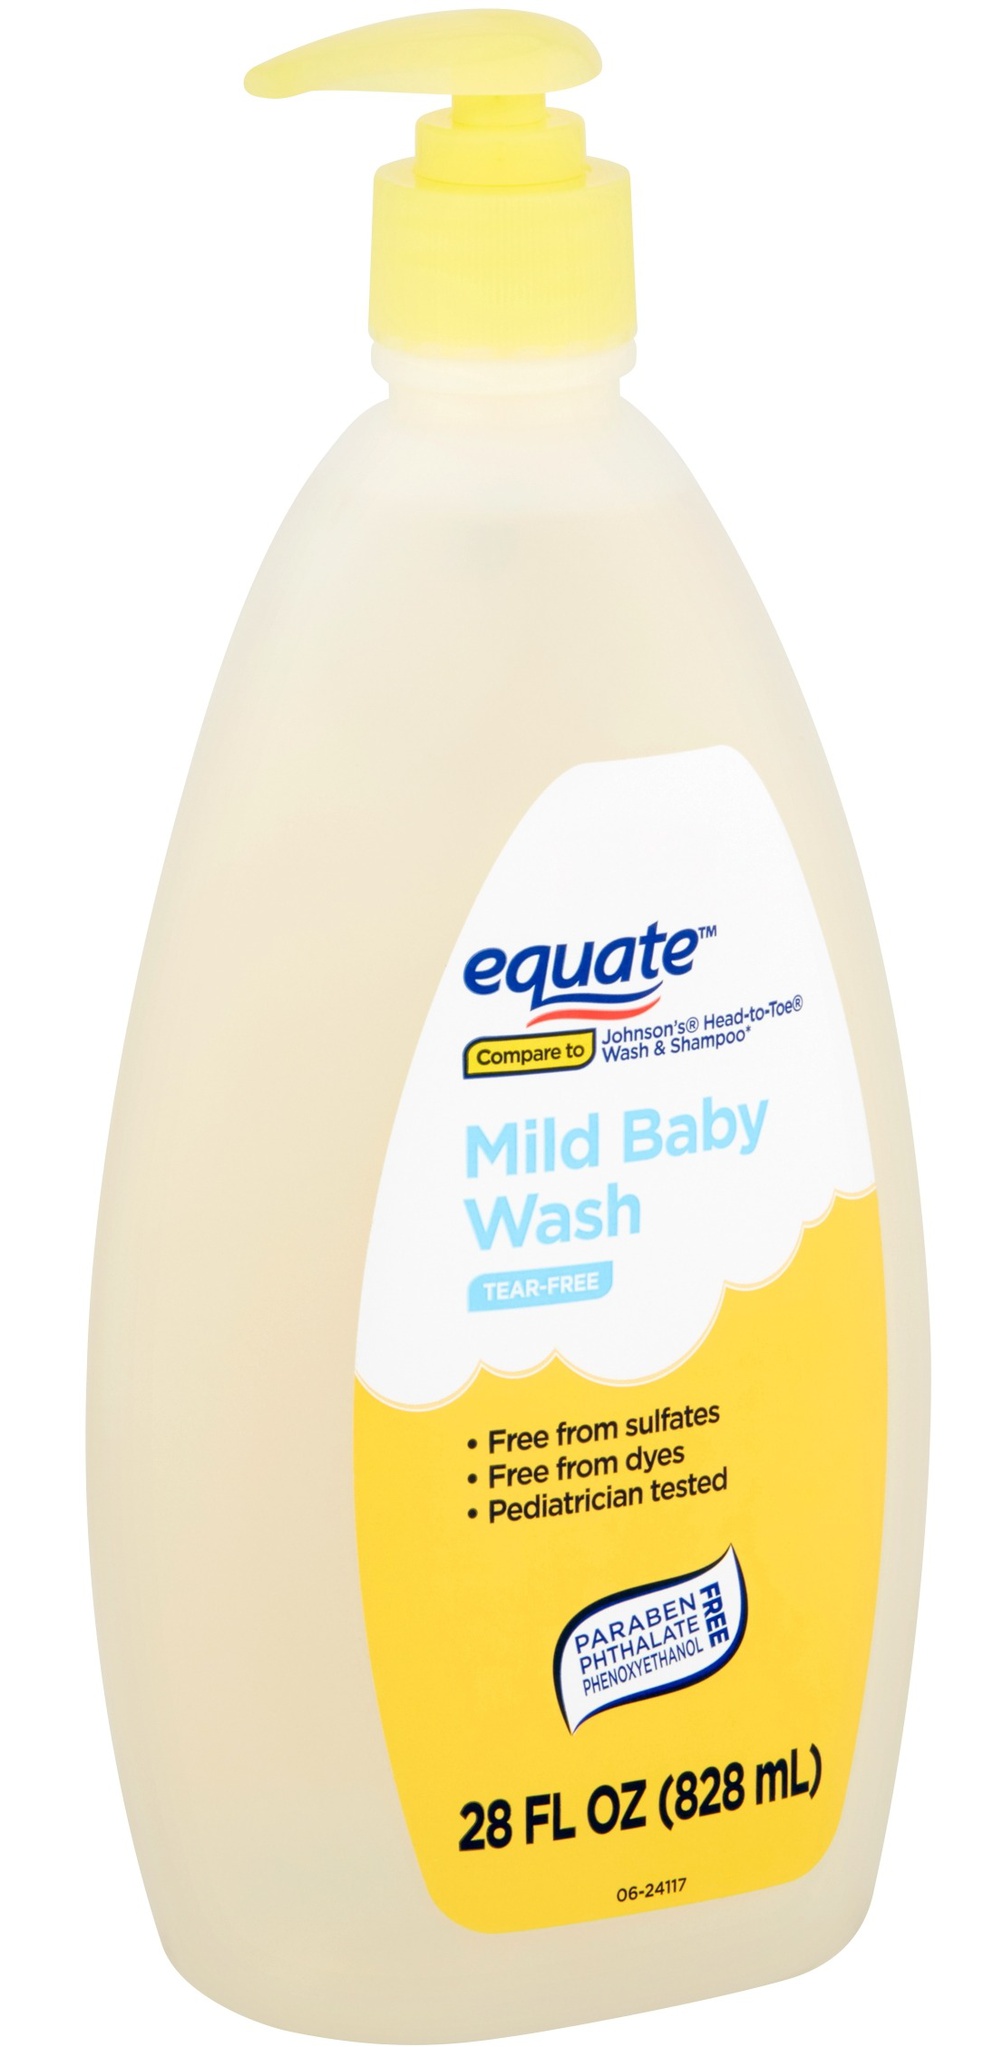 Equate Tear-free Mild Baby Wash